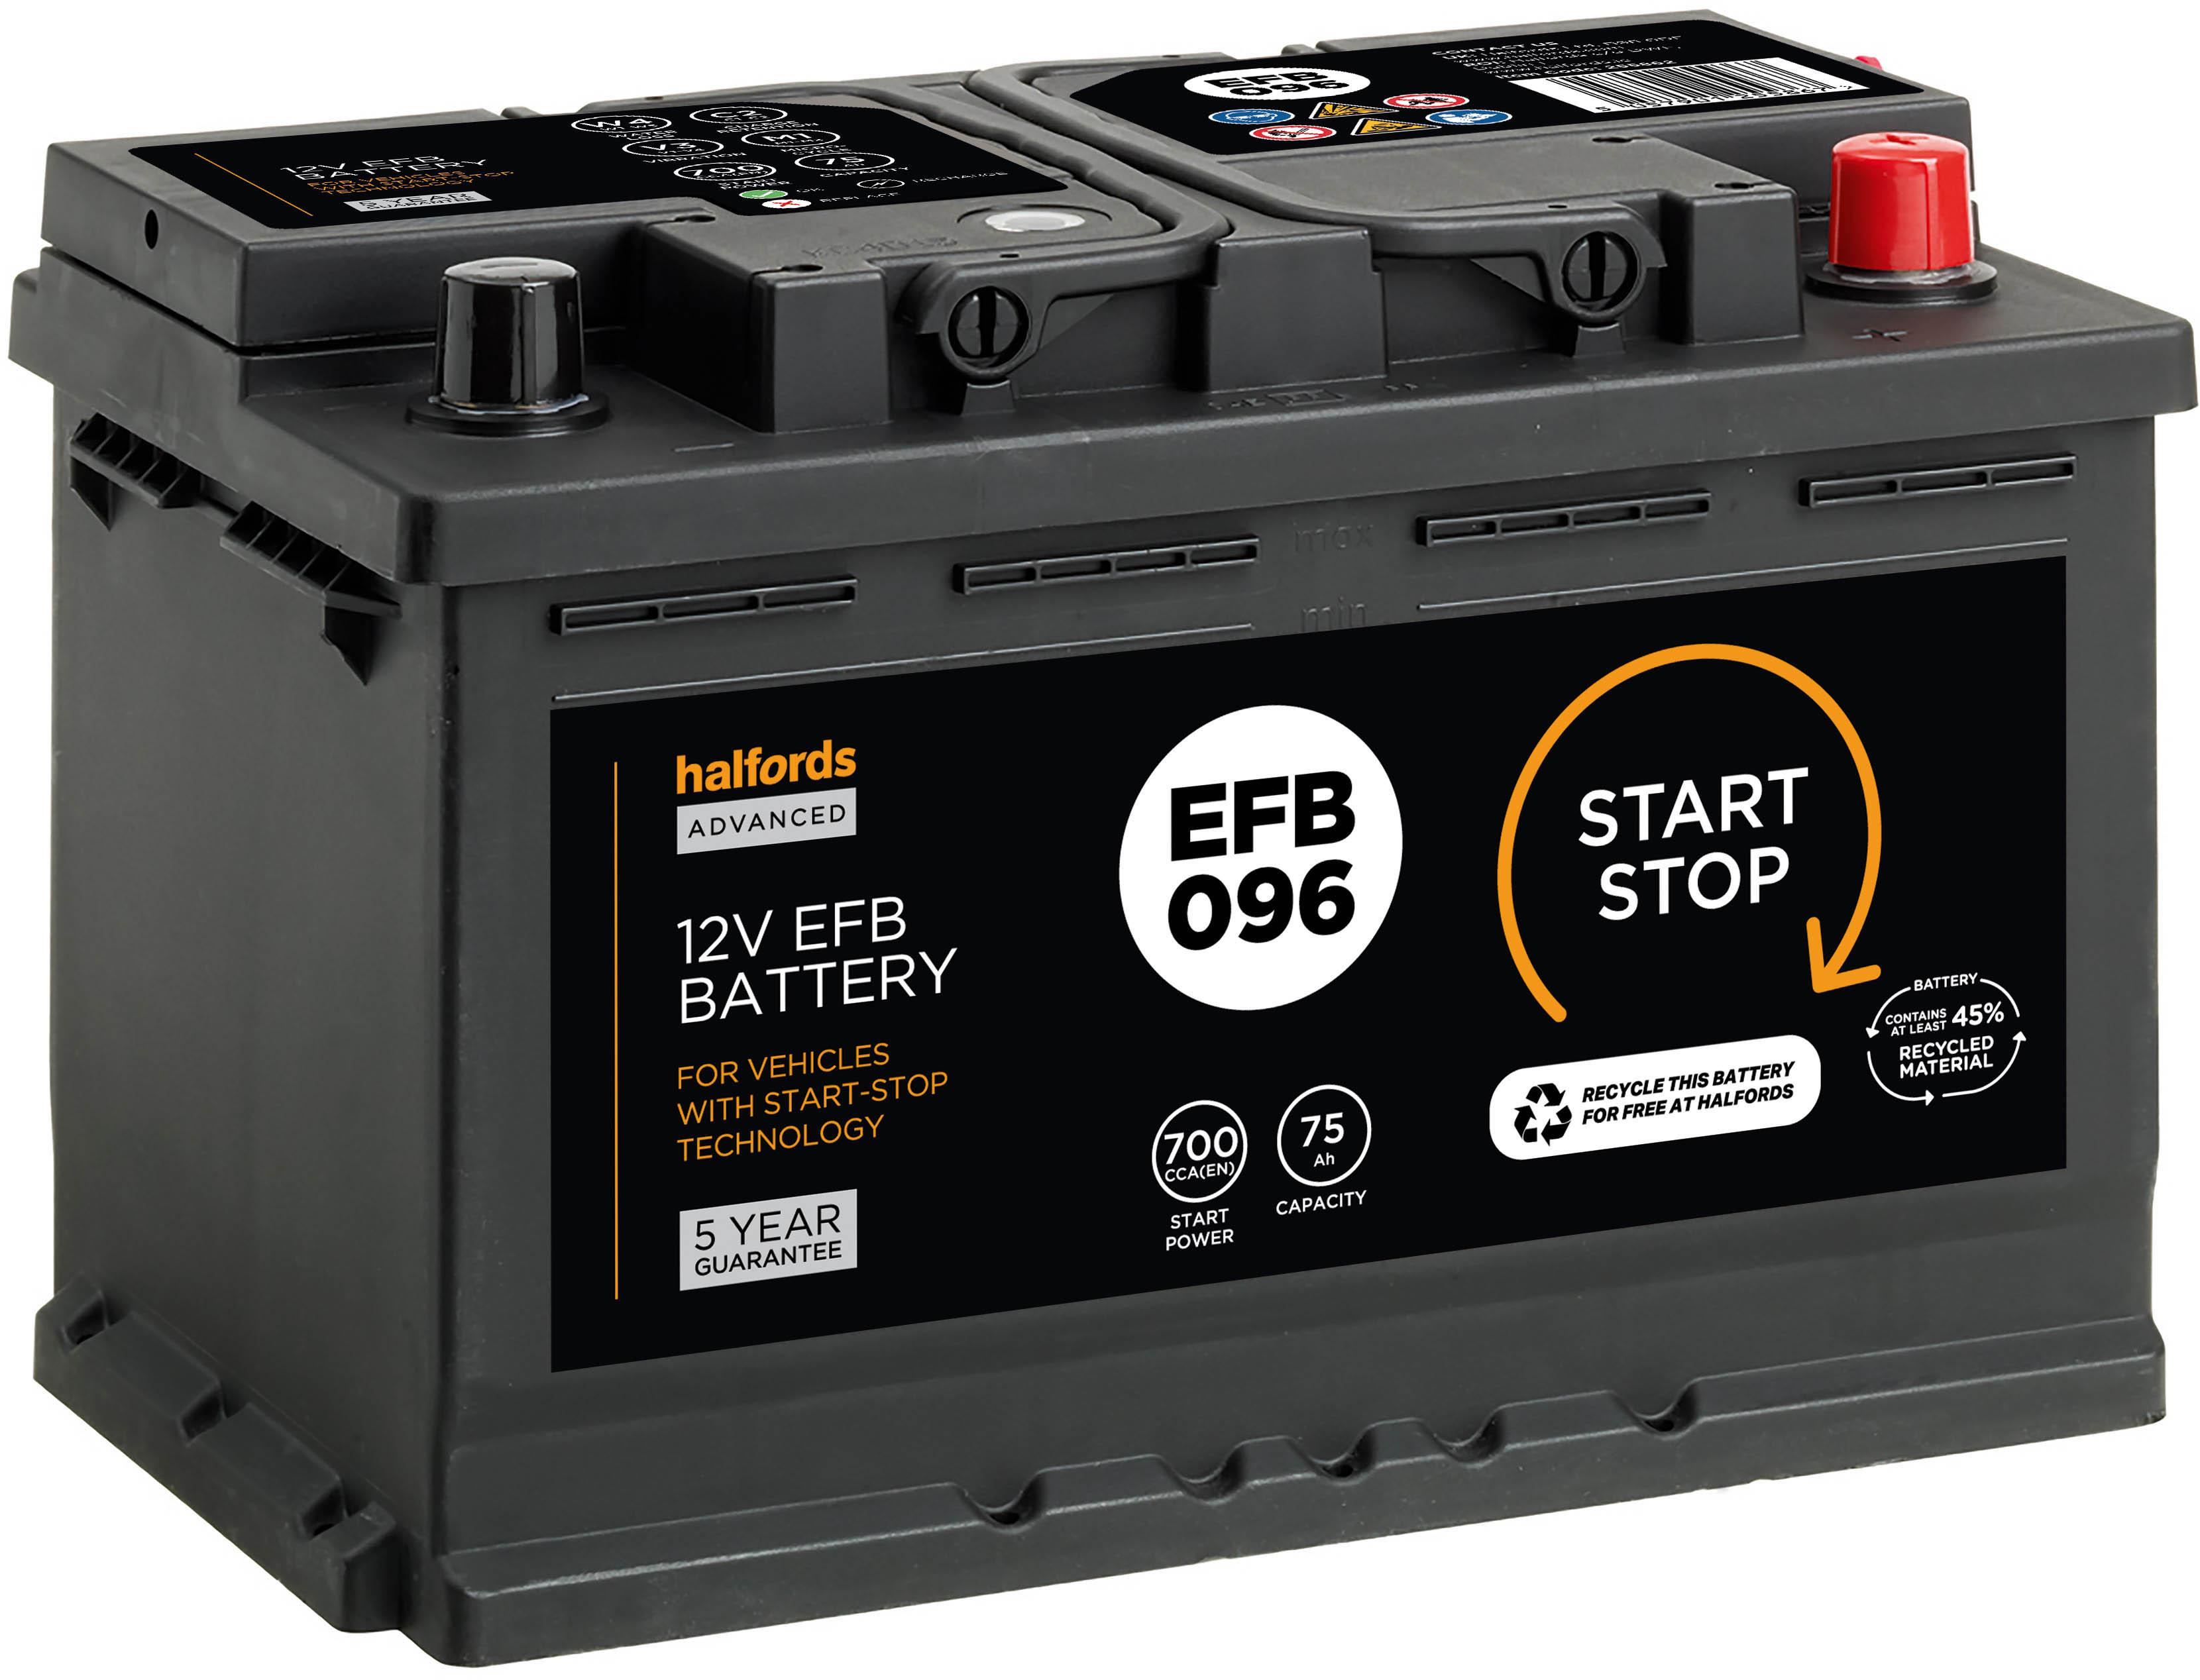 Halfords Efb096 Start Stop Car Battery 5 Year Guarantee